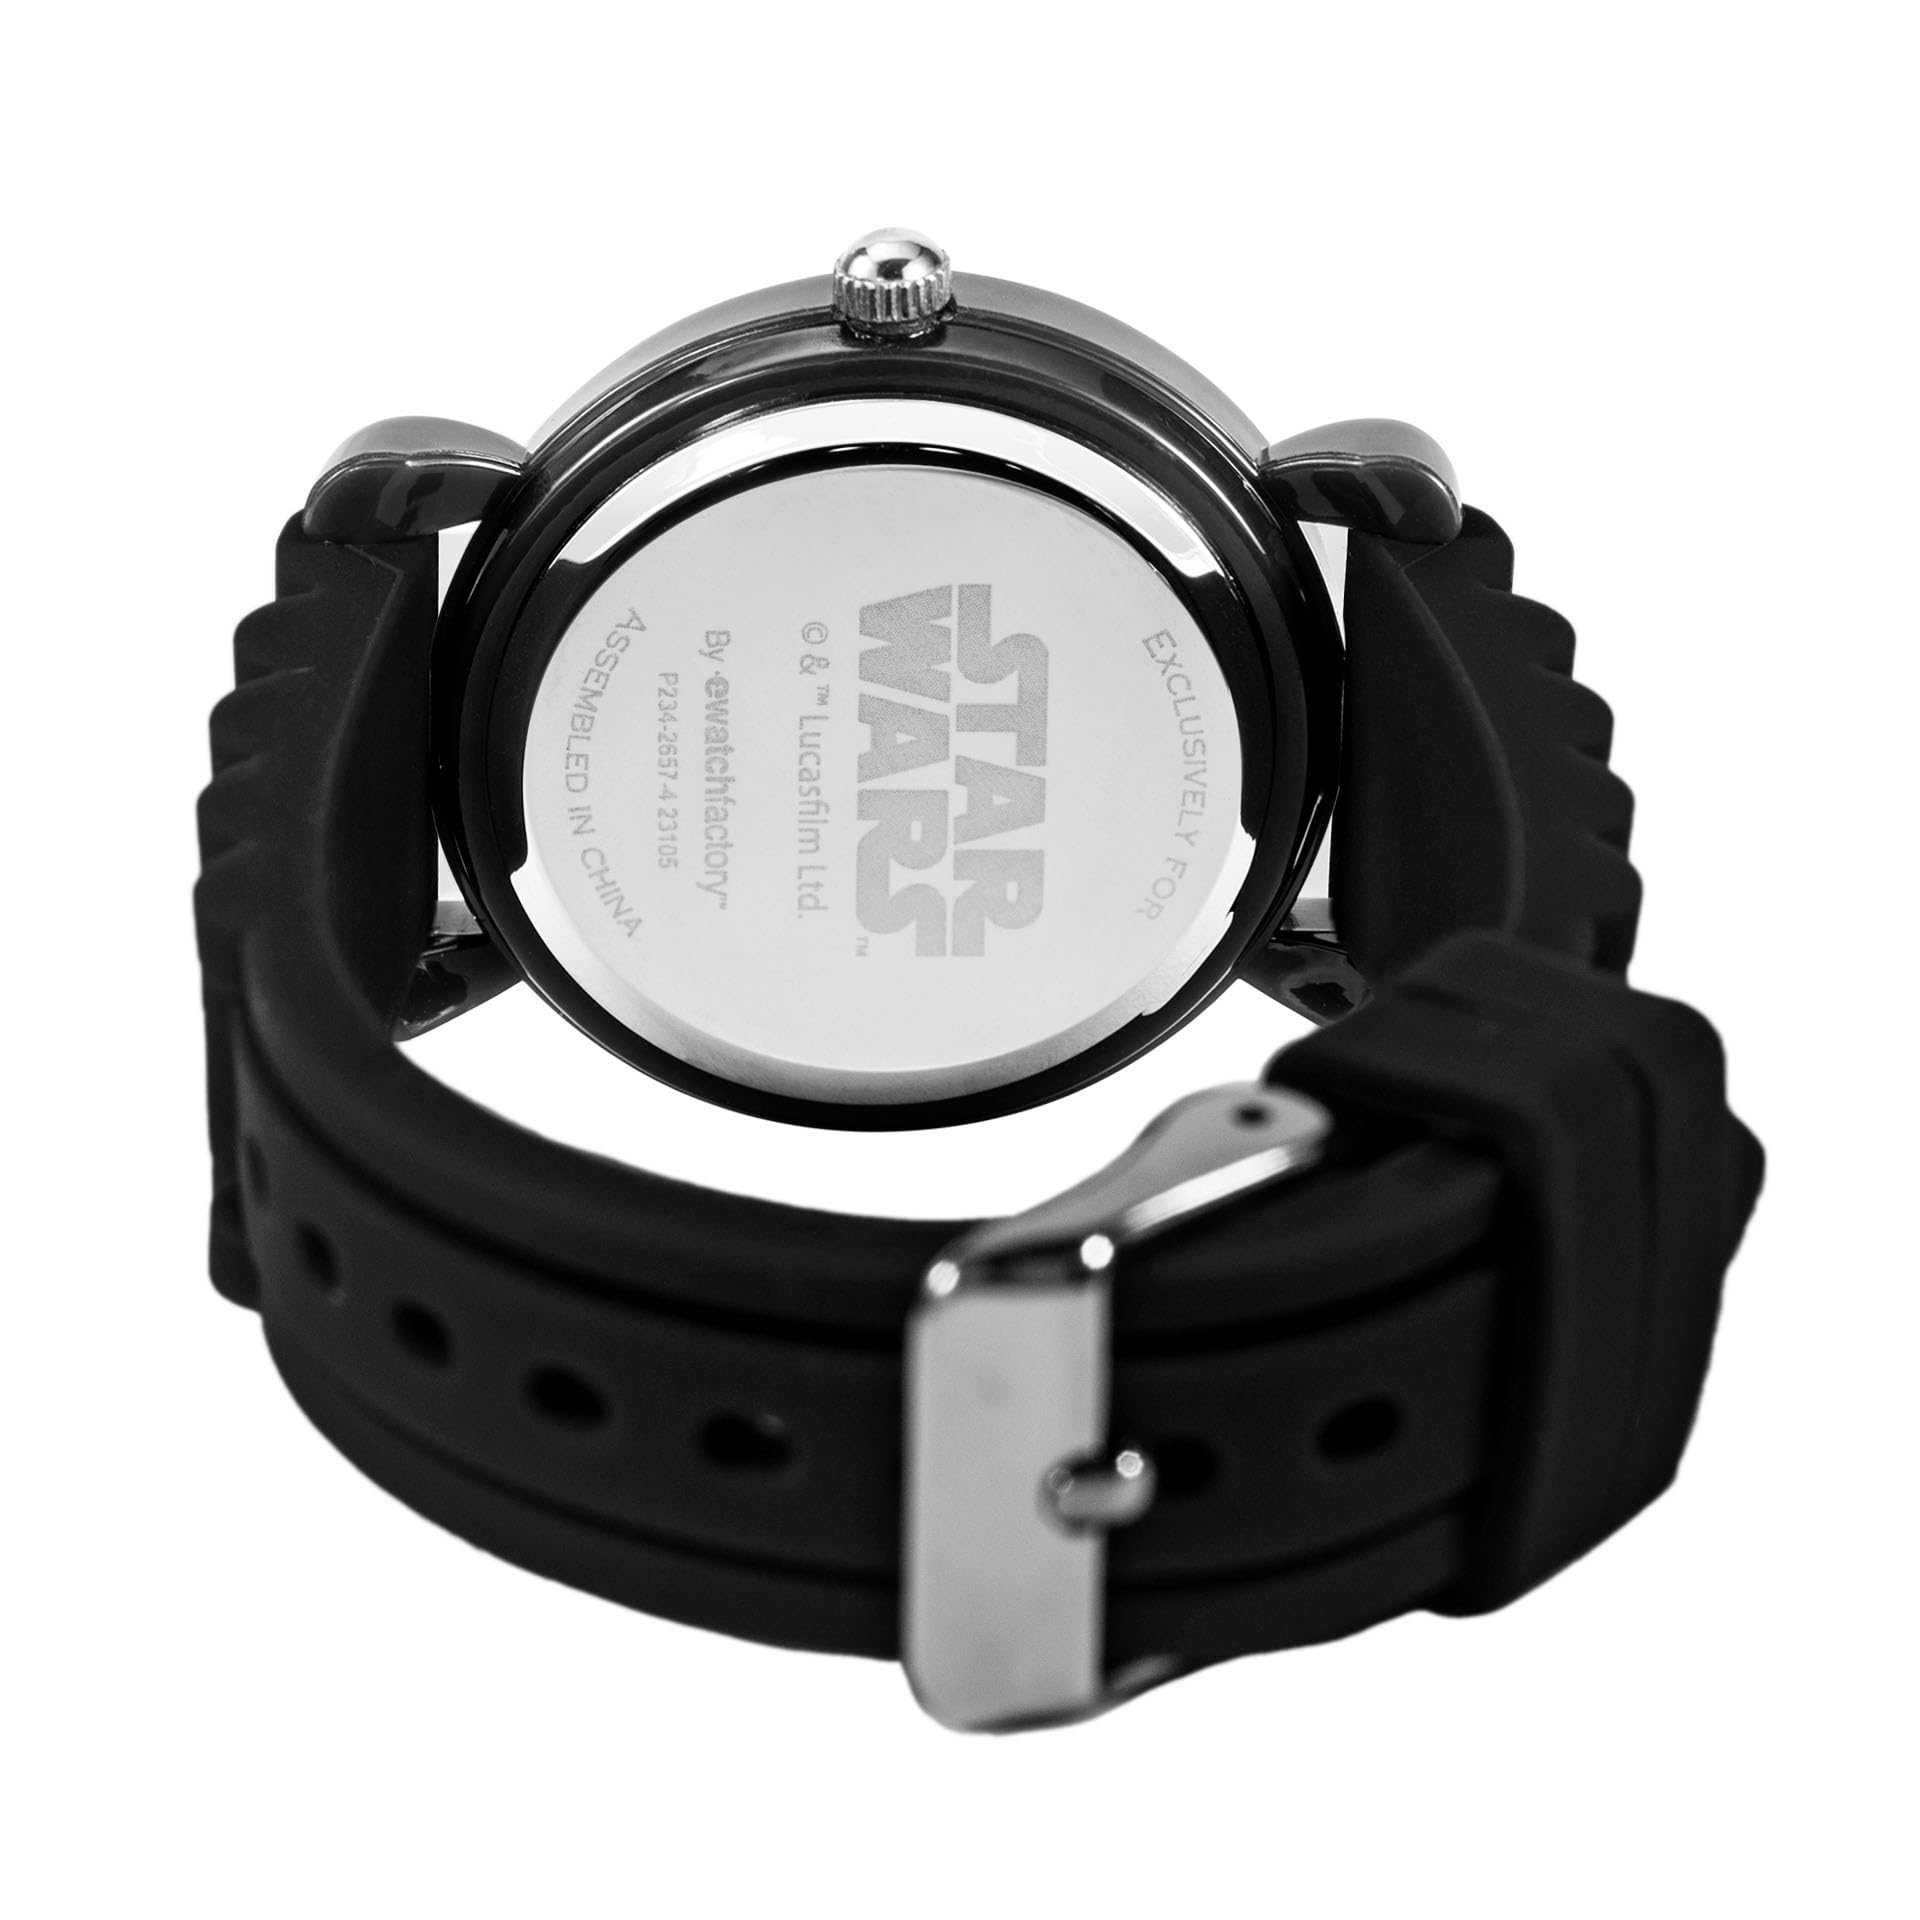 STAR WARS Kids' Plastic Time Teacher Watch, Analog Quartz Silicone Strap Watch